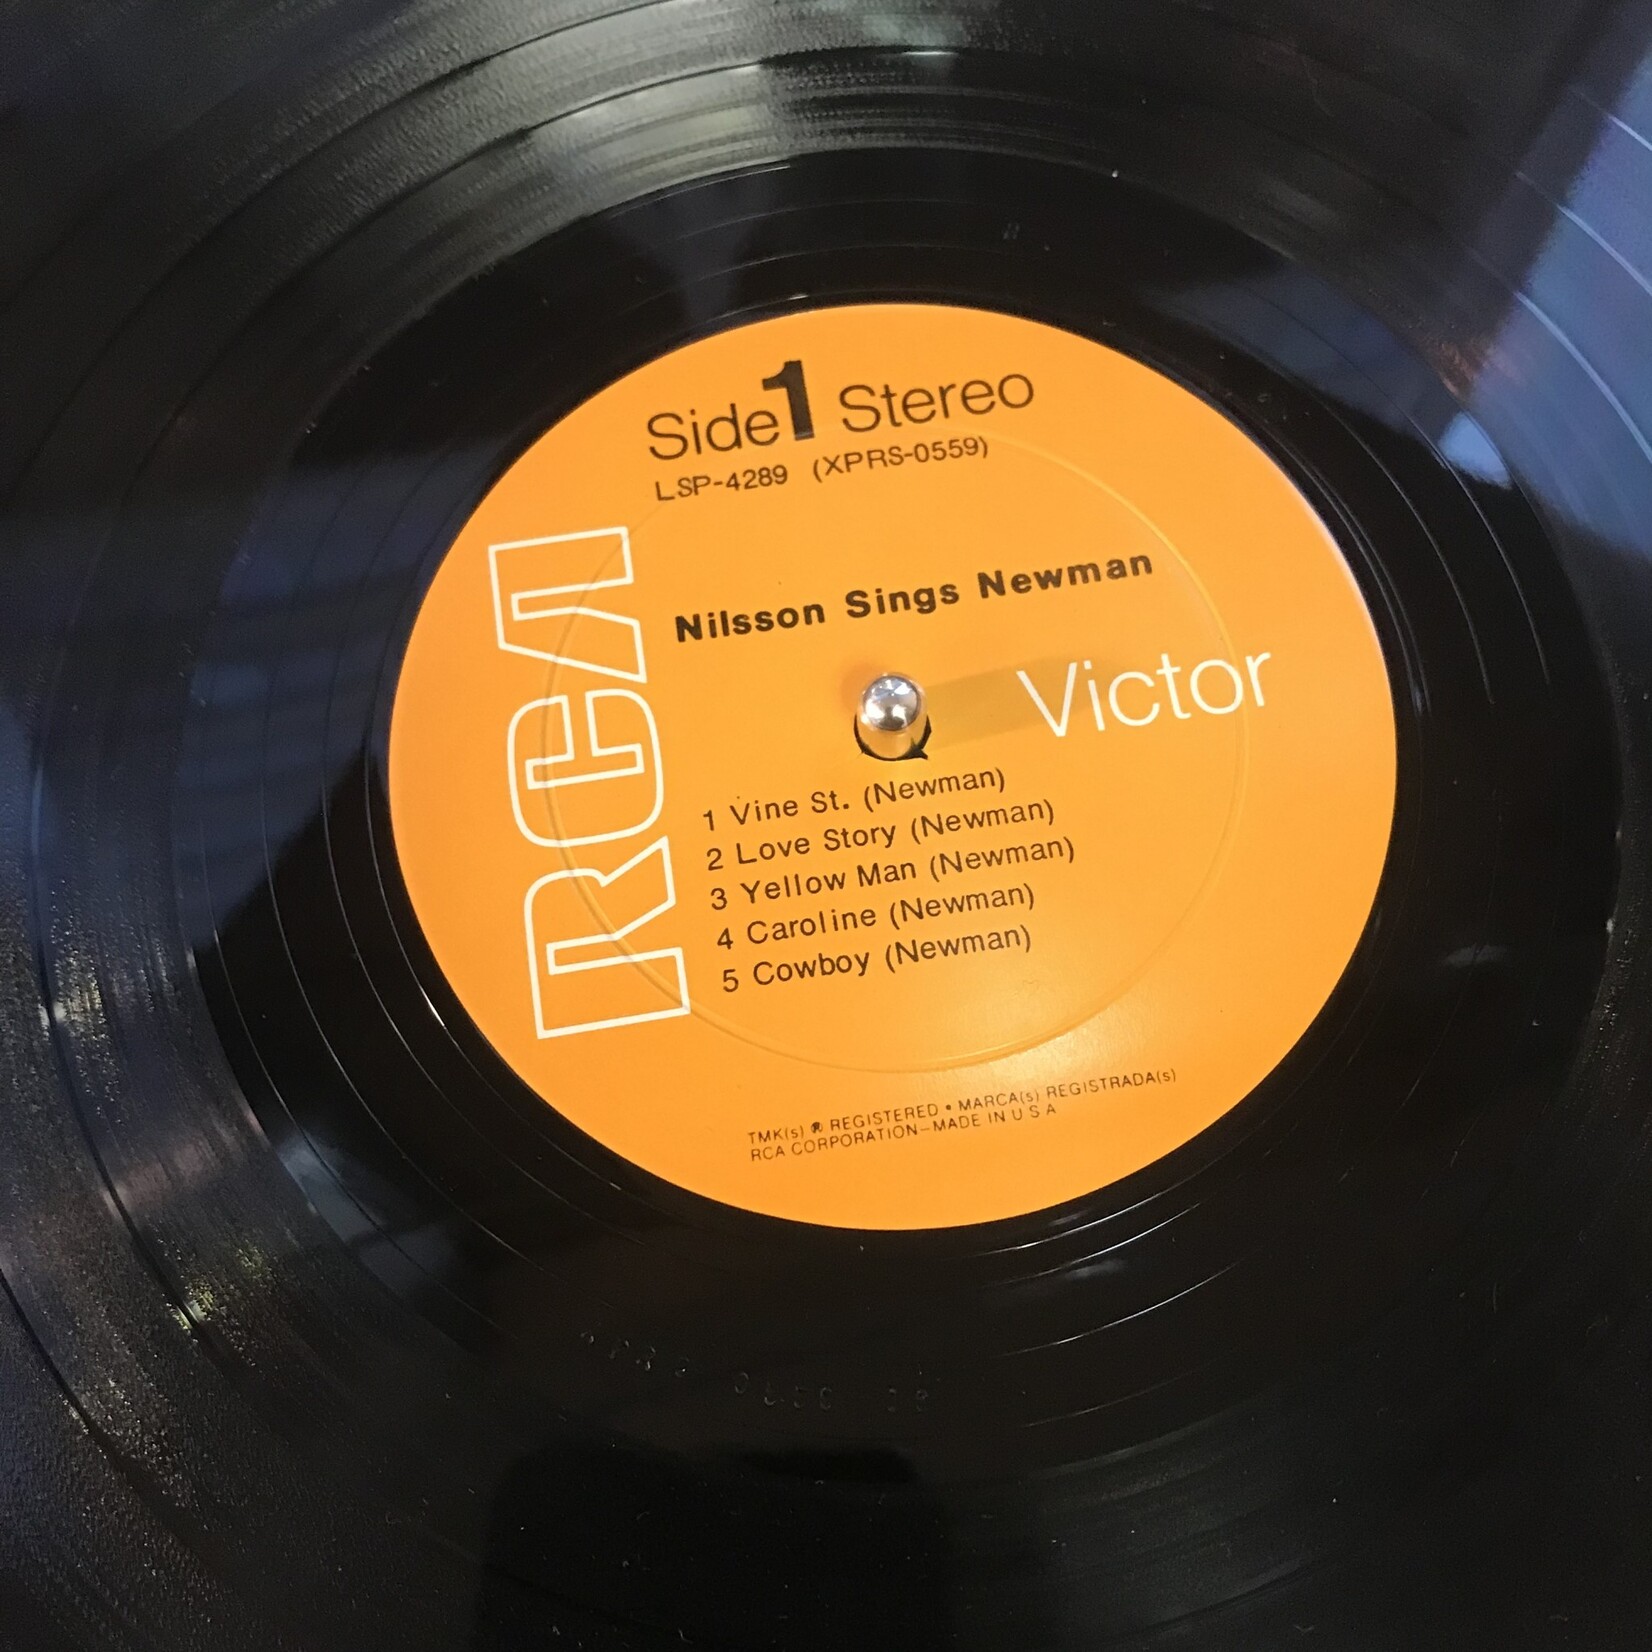 Harry Nilsson- Nilsson Sings Newman - LSP 4289 - Vinyl LP (USED)